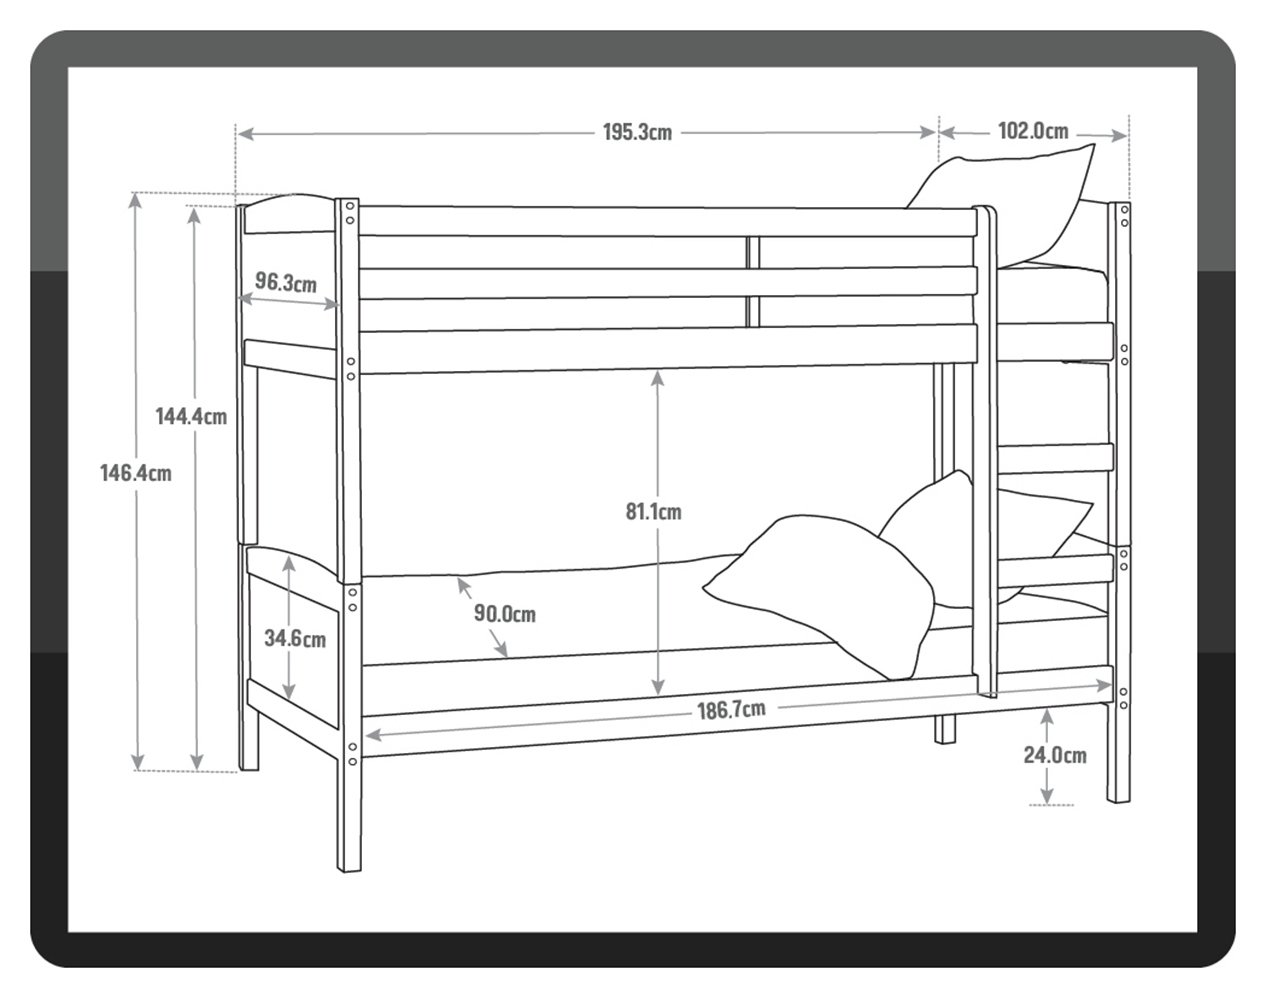 чертеж двухъярусной металлической кровати с размерами